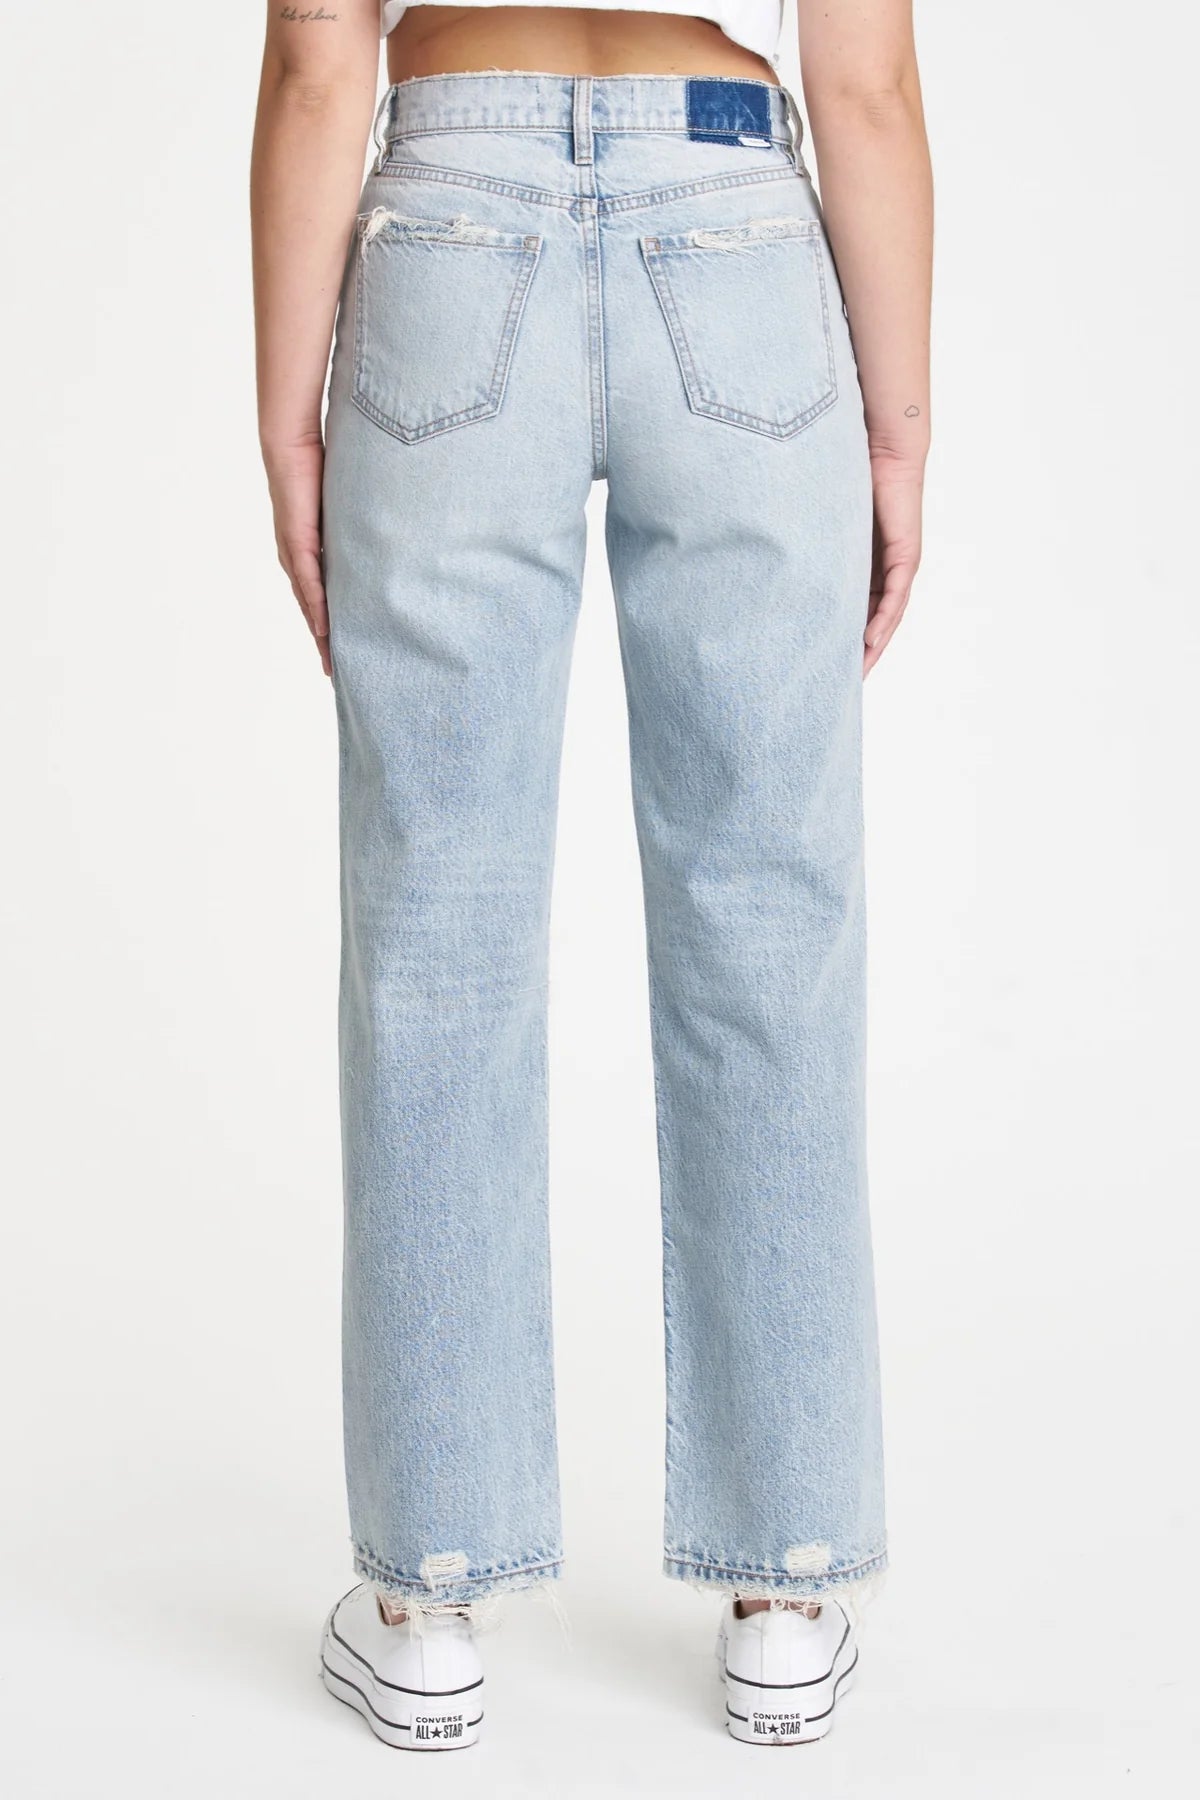 Daze Denim | Dad Jeans | Light Wash - Women's Pants - Blooming Daily